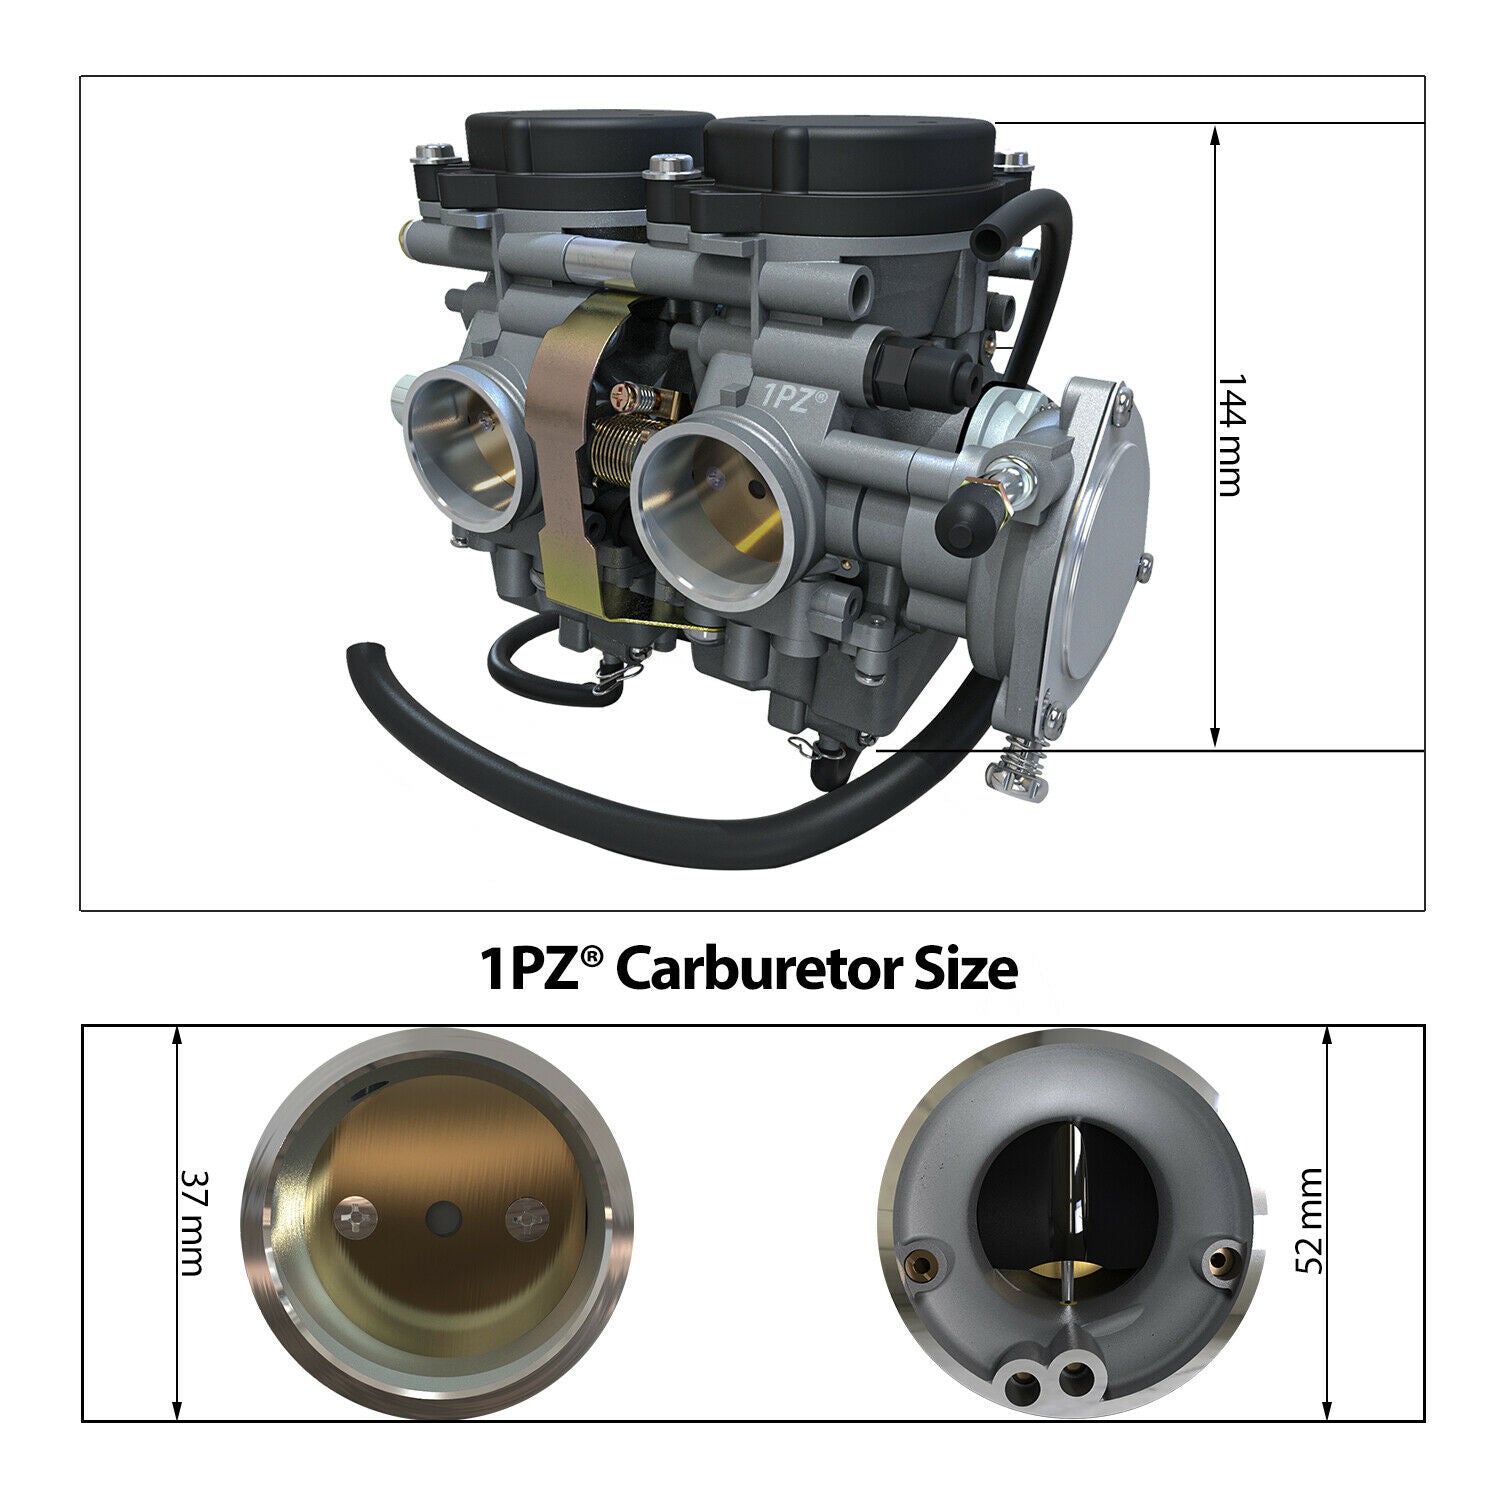 1PZ Carburetor Carb Replacement for Yamaha Raptor 660 660R YFM660 YFM660R 2001-2005 5LP-14900-00-00 5LP-14900-20-00 5LP-14900-30-00